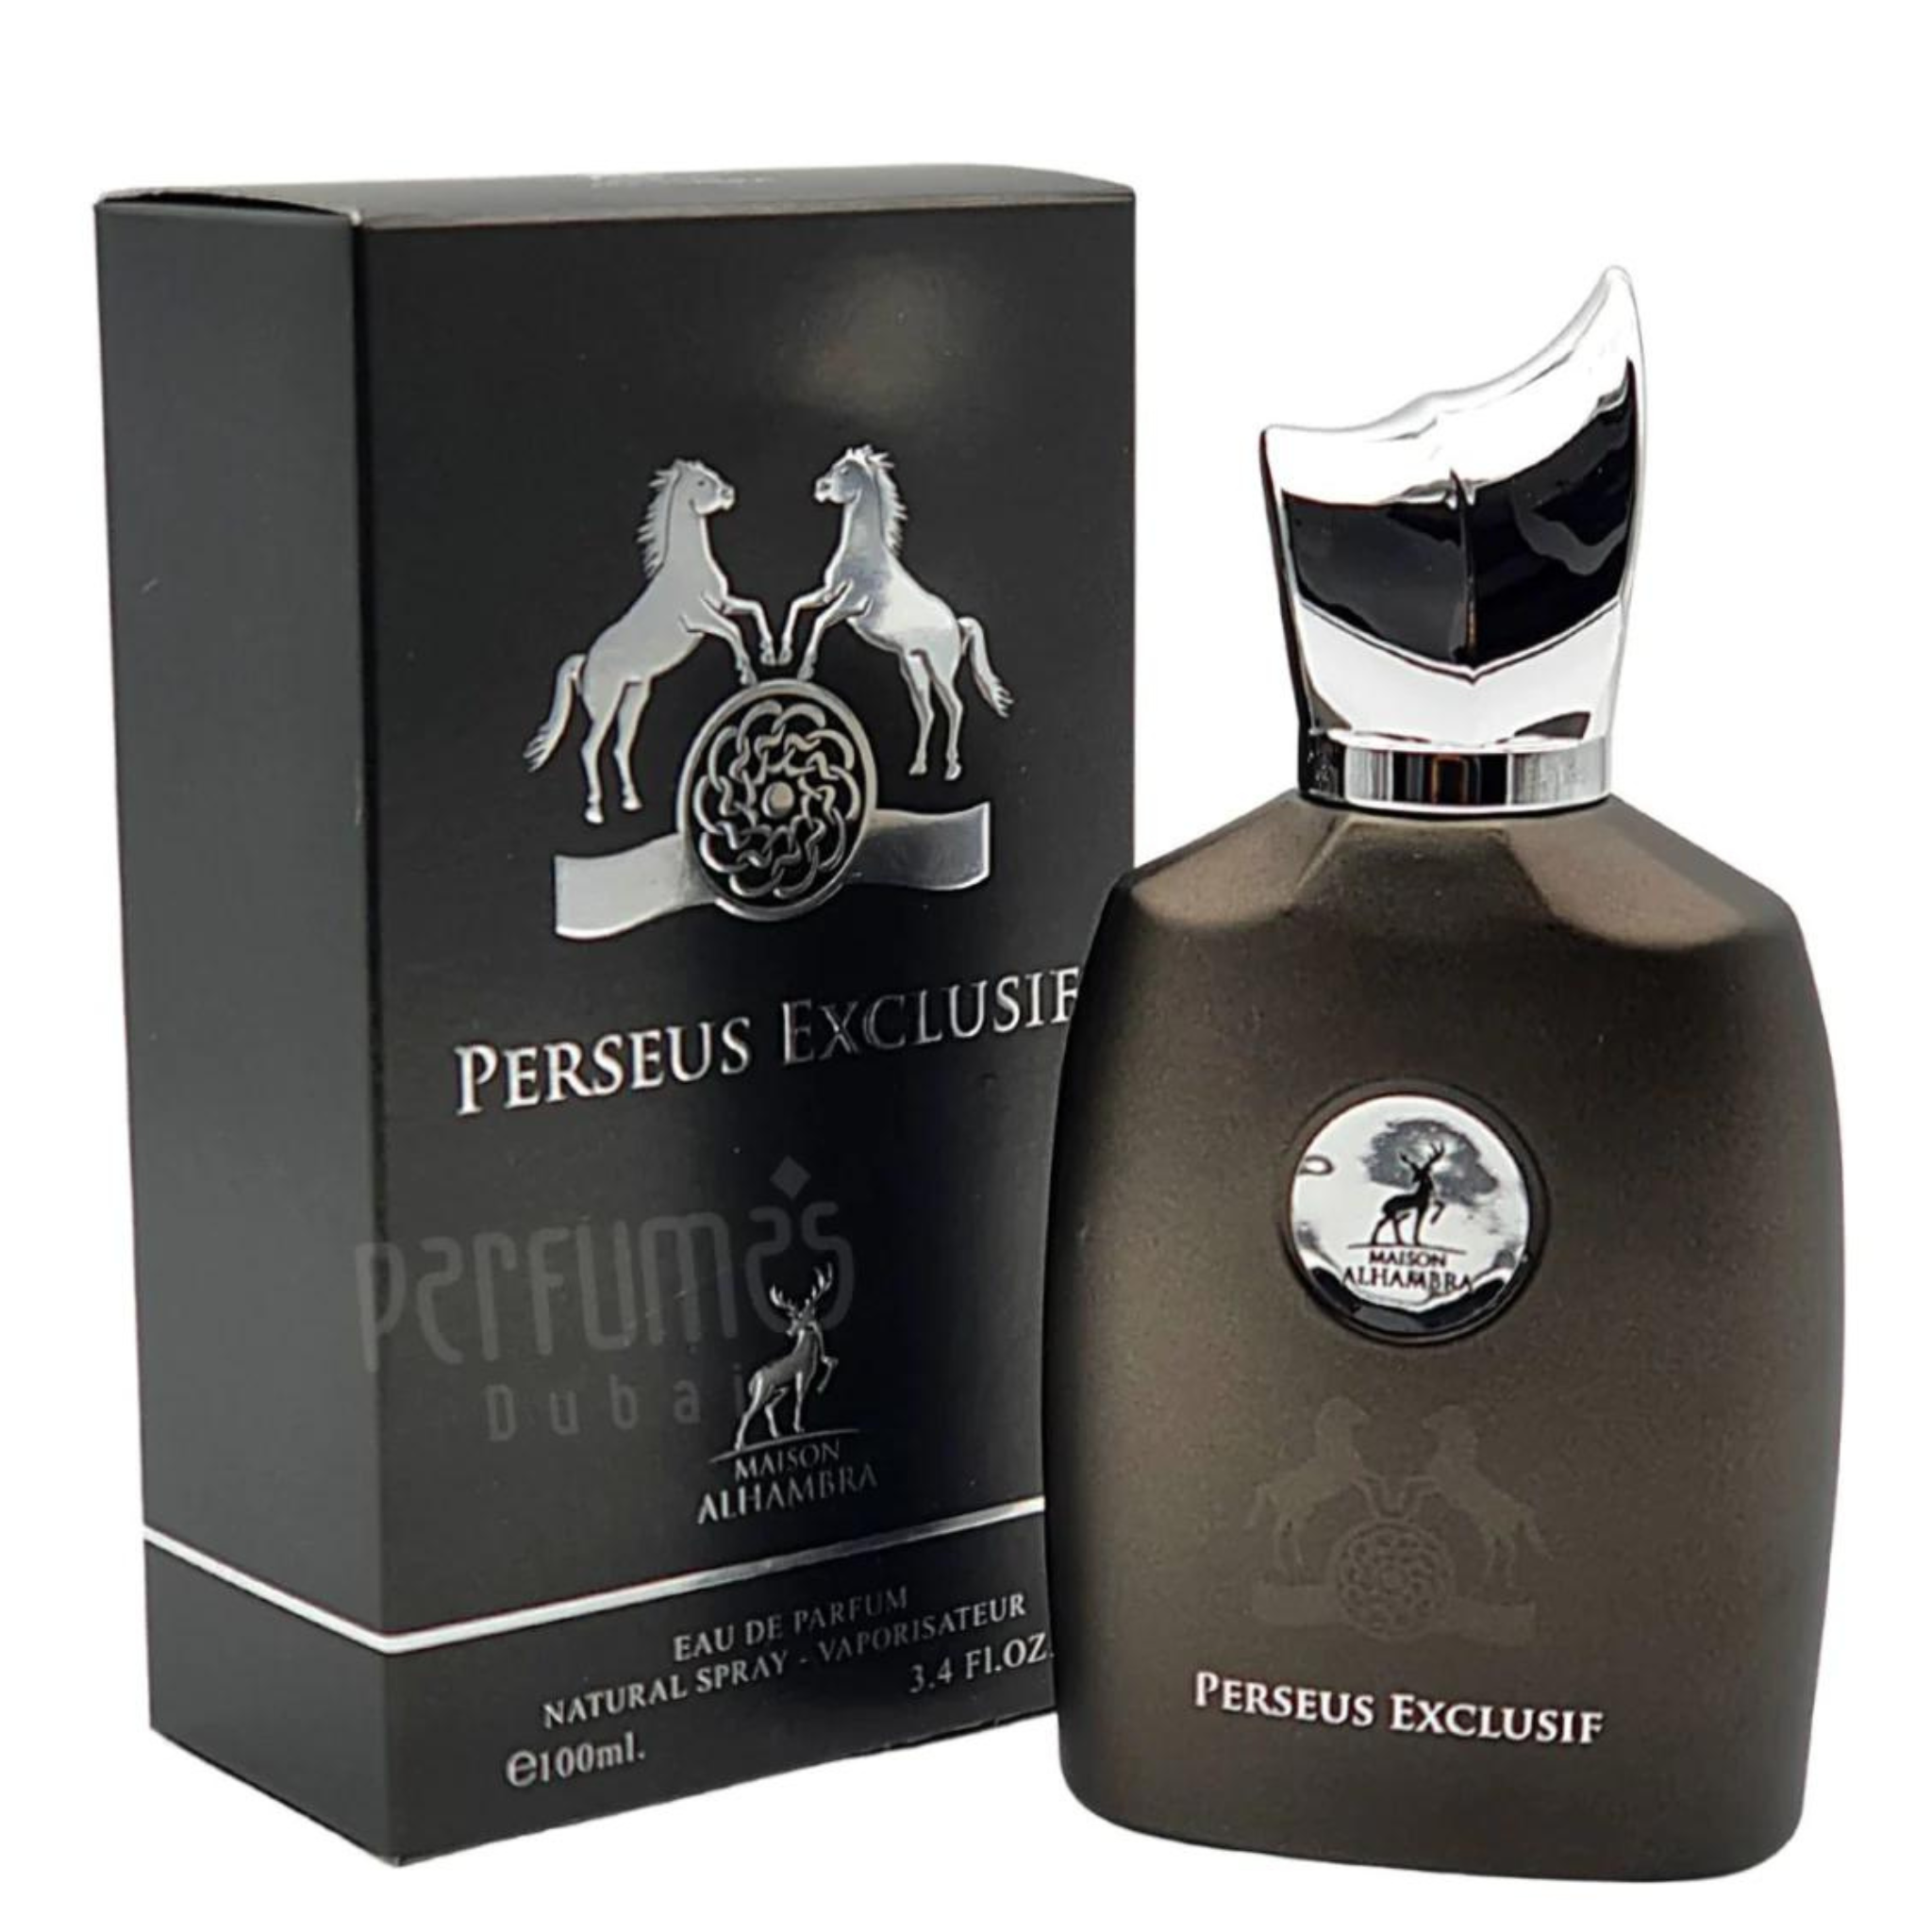 Perseus Exclusif | Eau De Parfume 100ml |